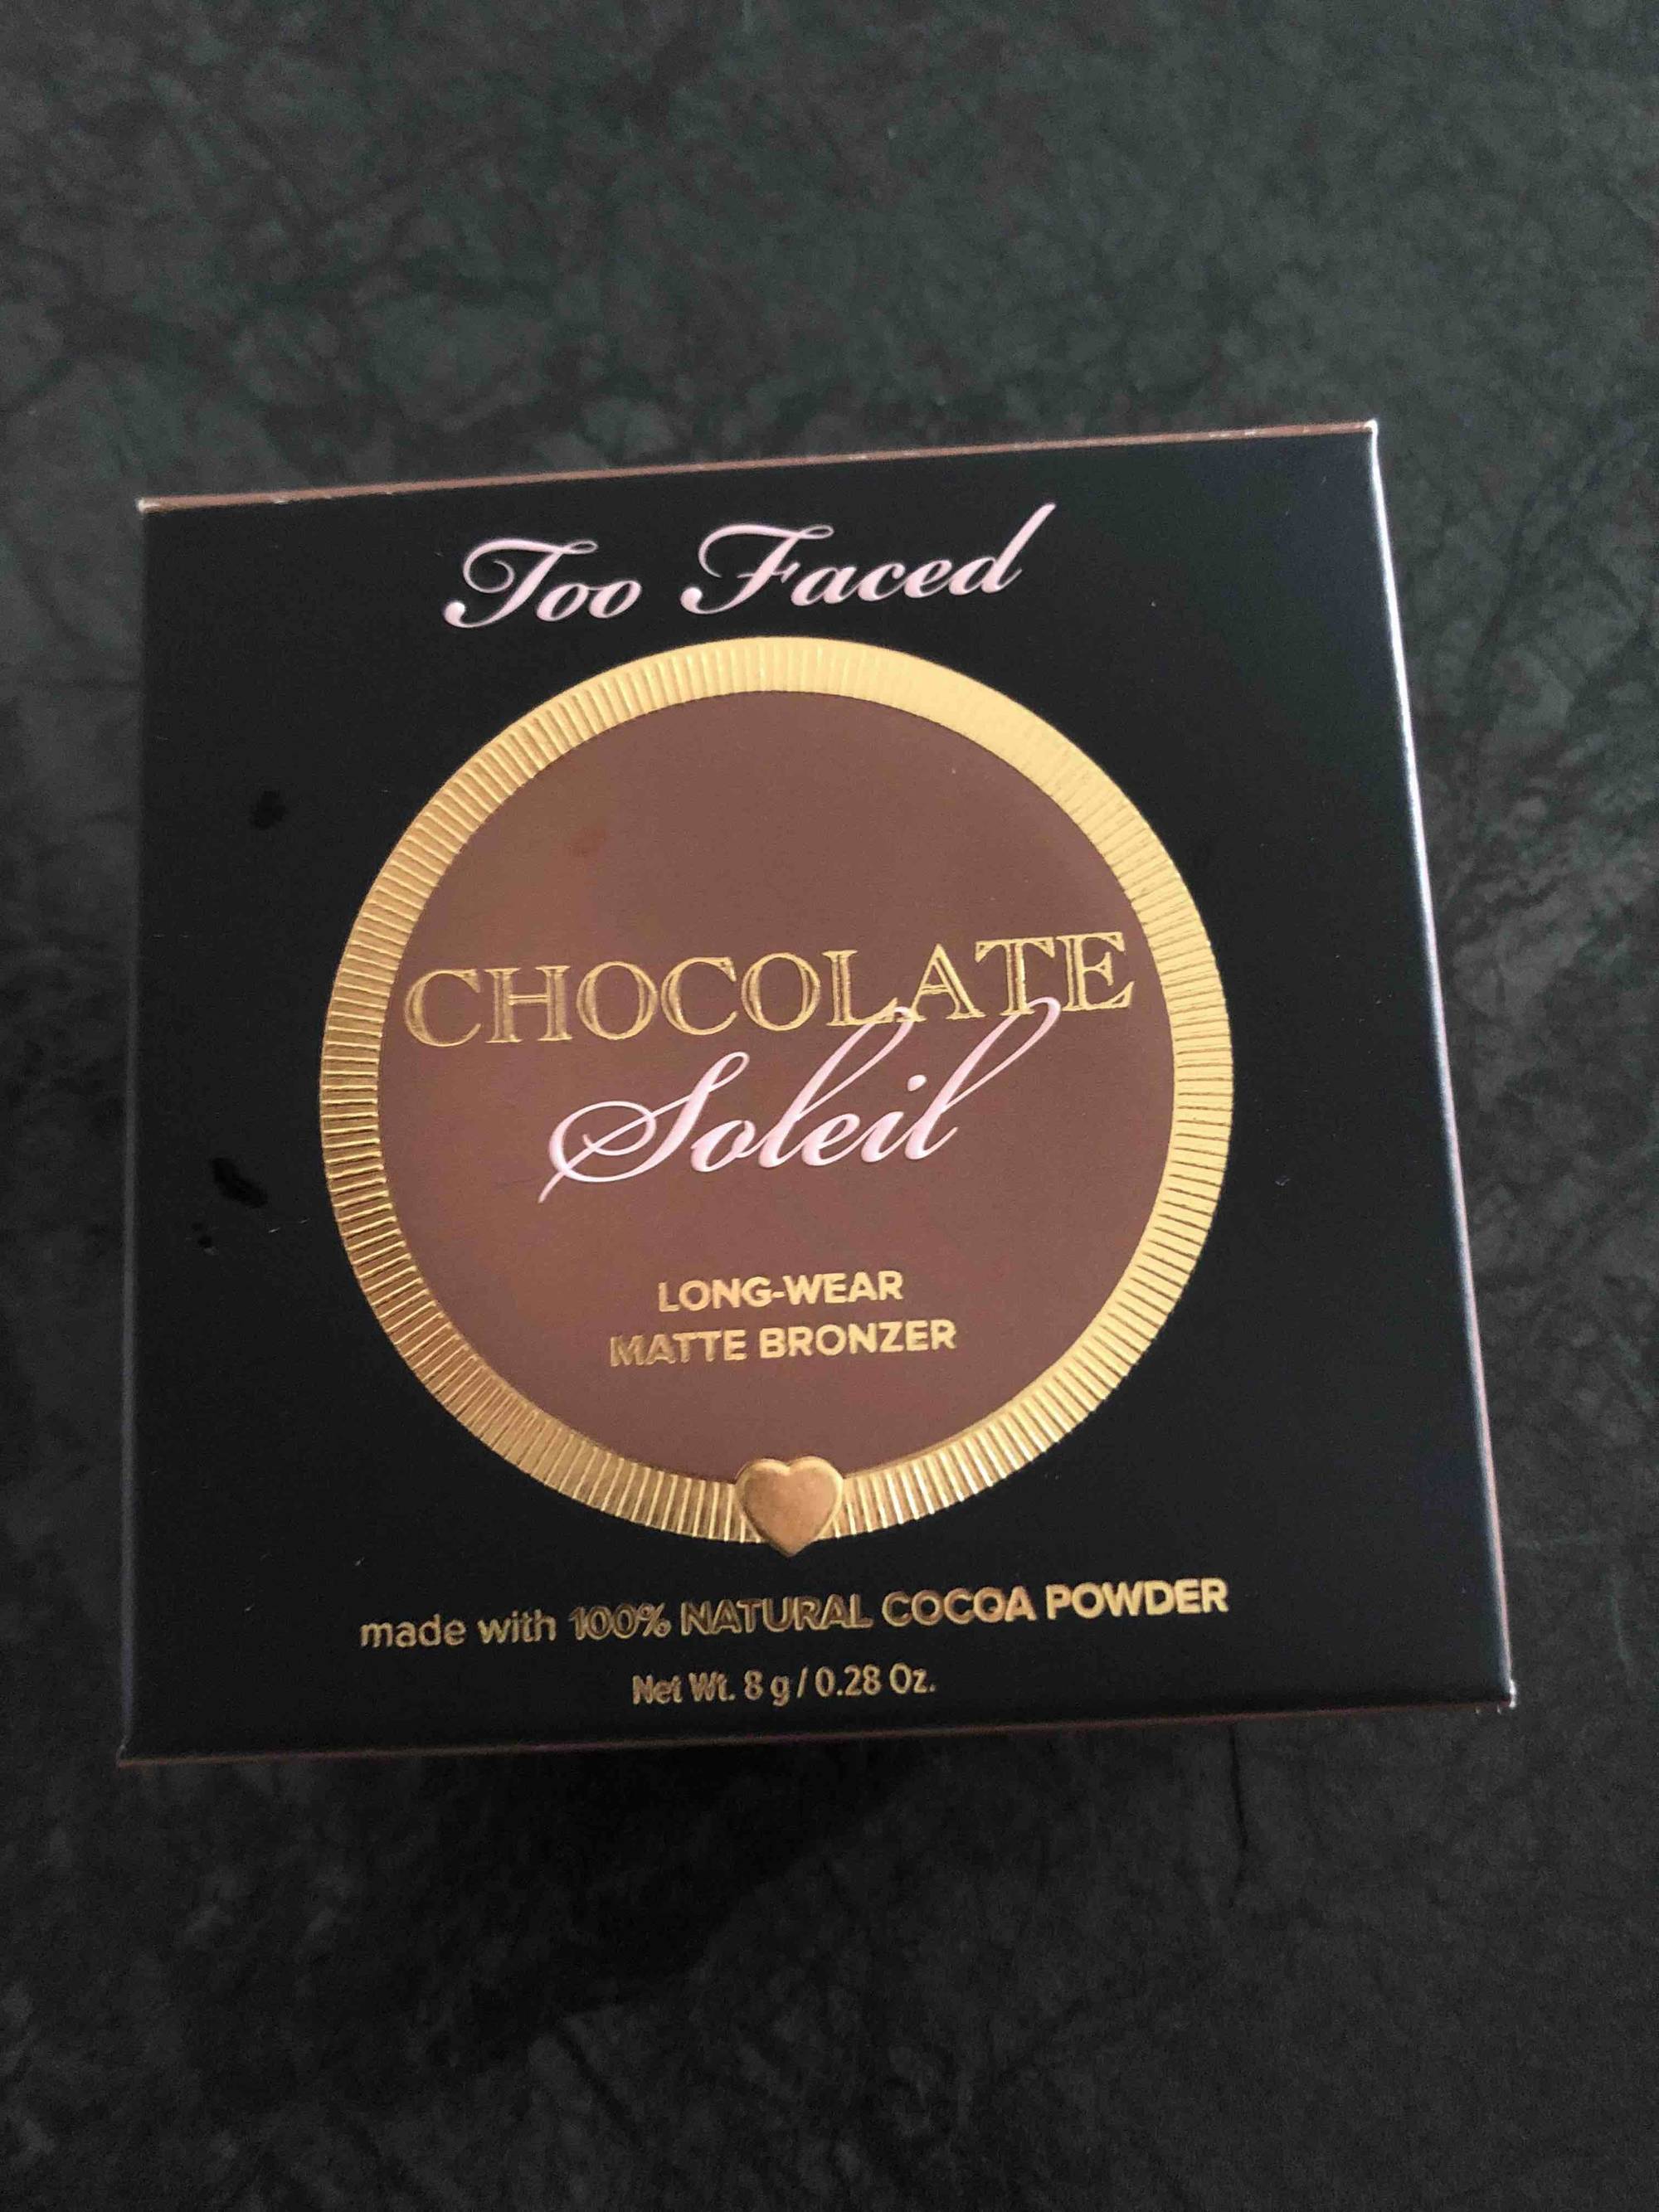 TOO FACED - Chocolate soleil - Long-wear matte bronzer